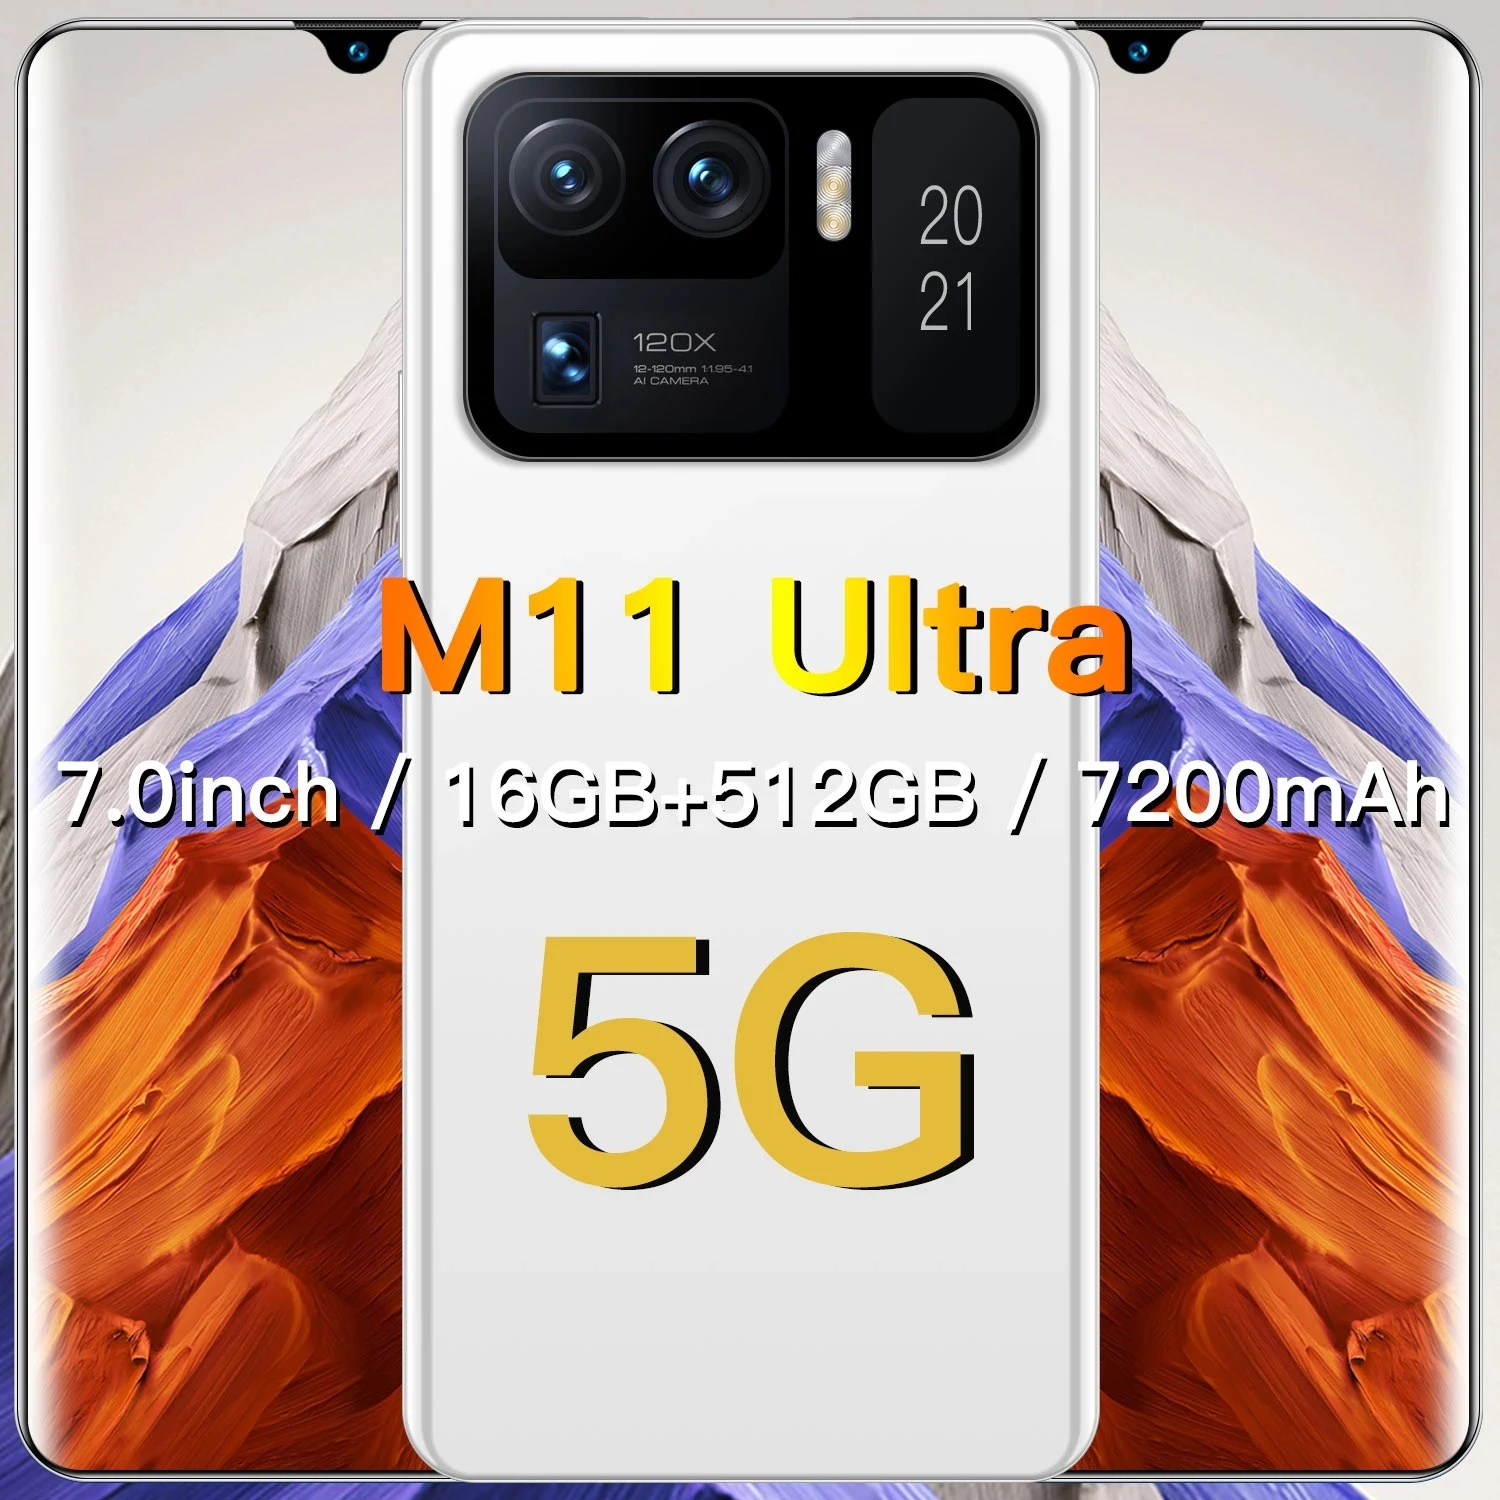 

Teléfono Inteligente M11 Ultra, versión Global, 7,0 pulgadas, 32 + 64MP, 16 + 512GB, Android 10, red, 10 núcleos, SIM Dual, 4G,